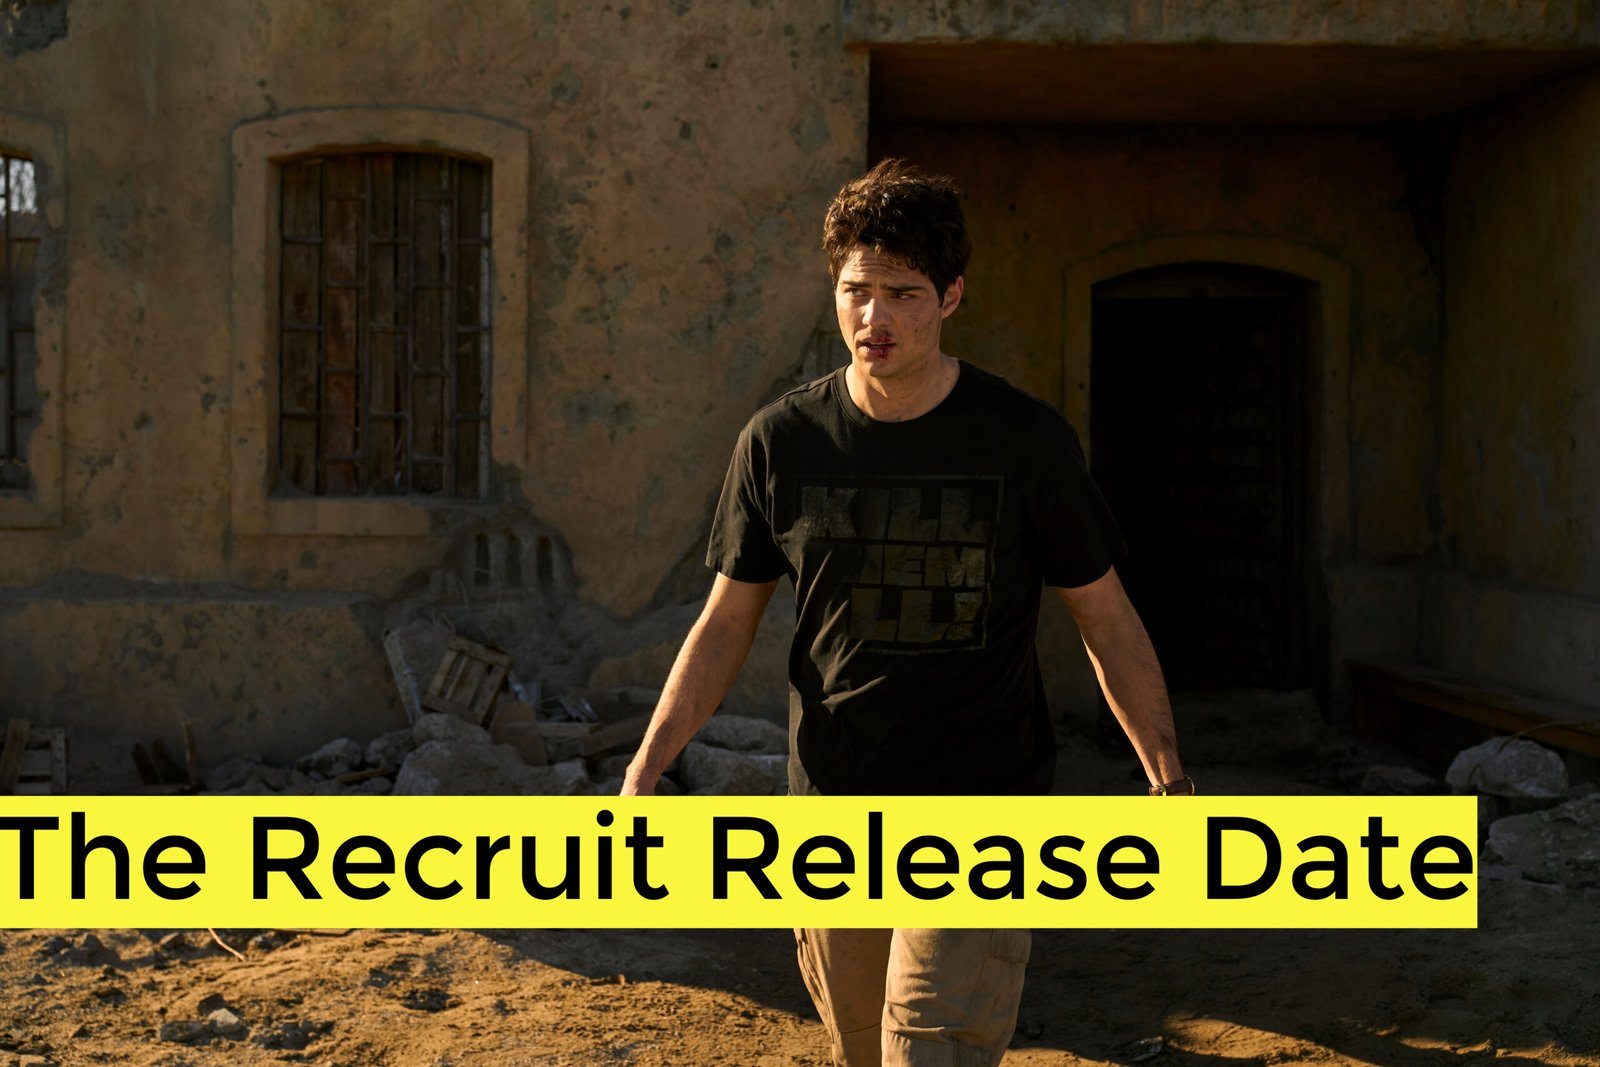 The Recruit Release Date, Trailer